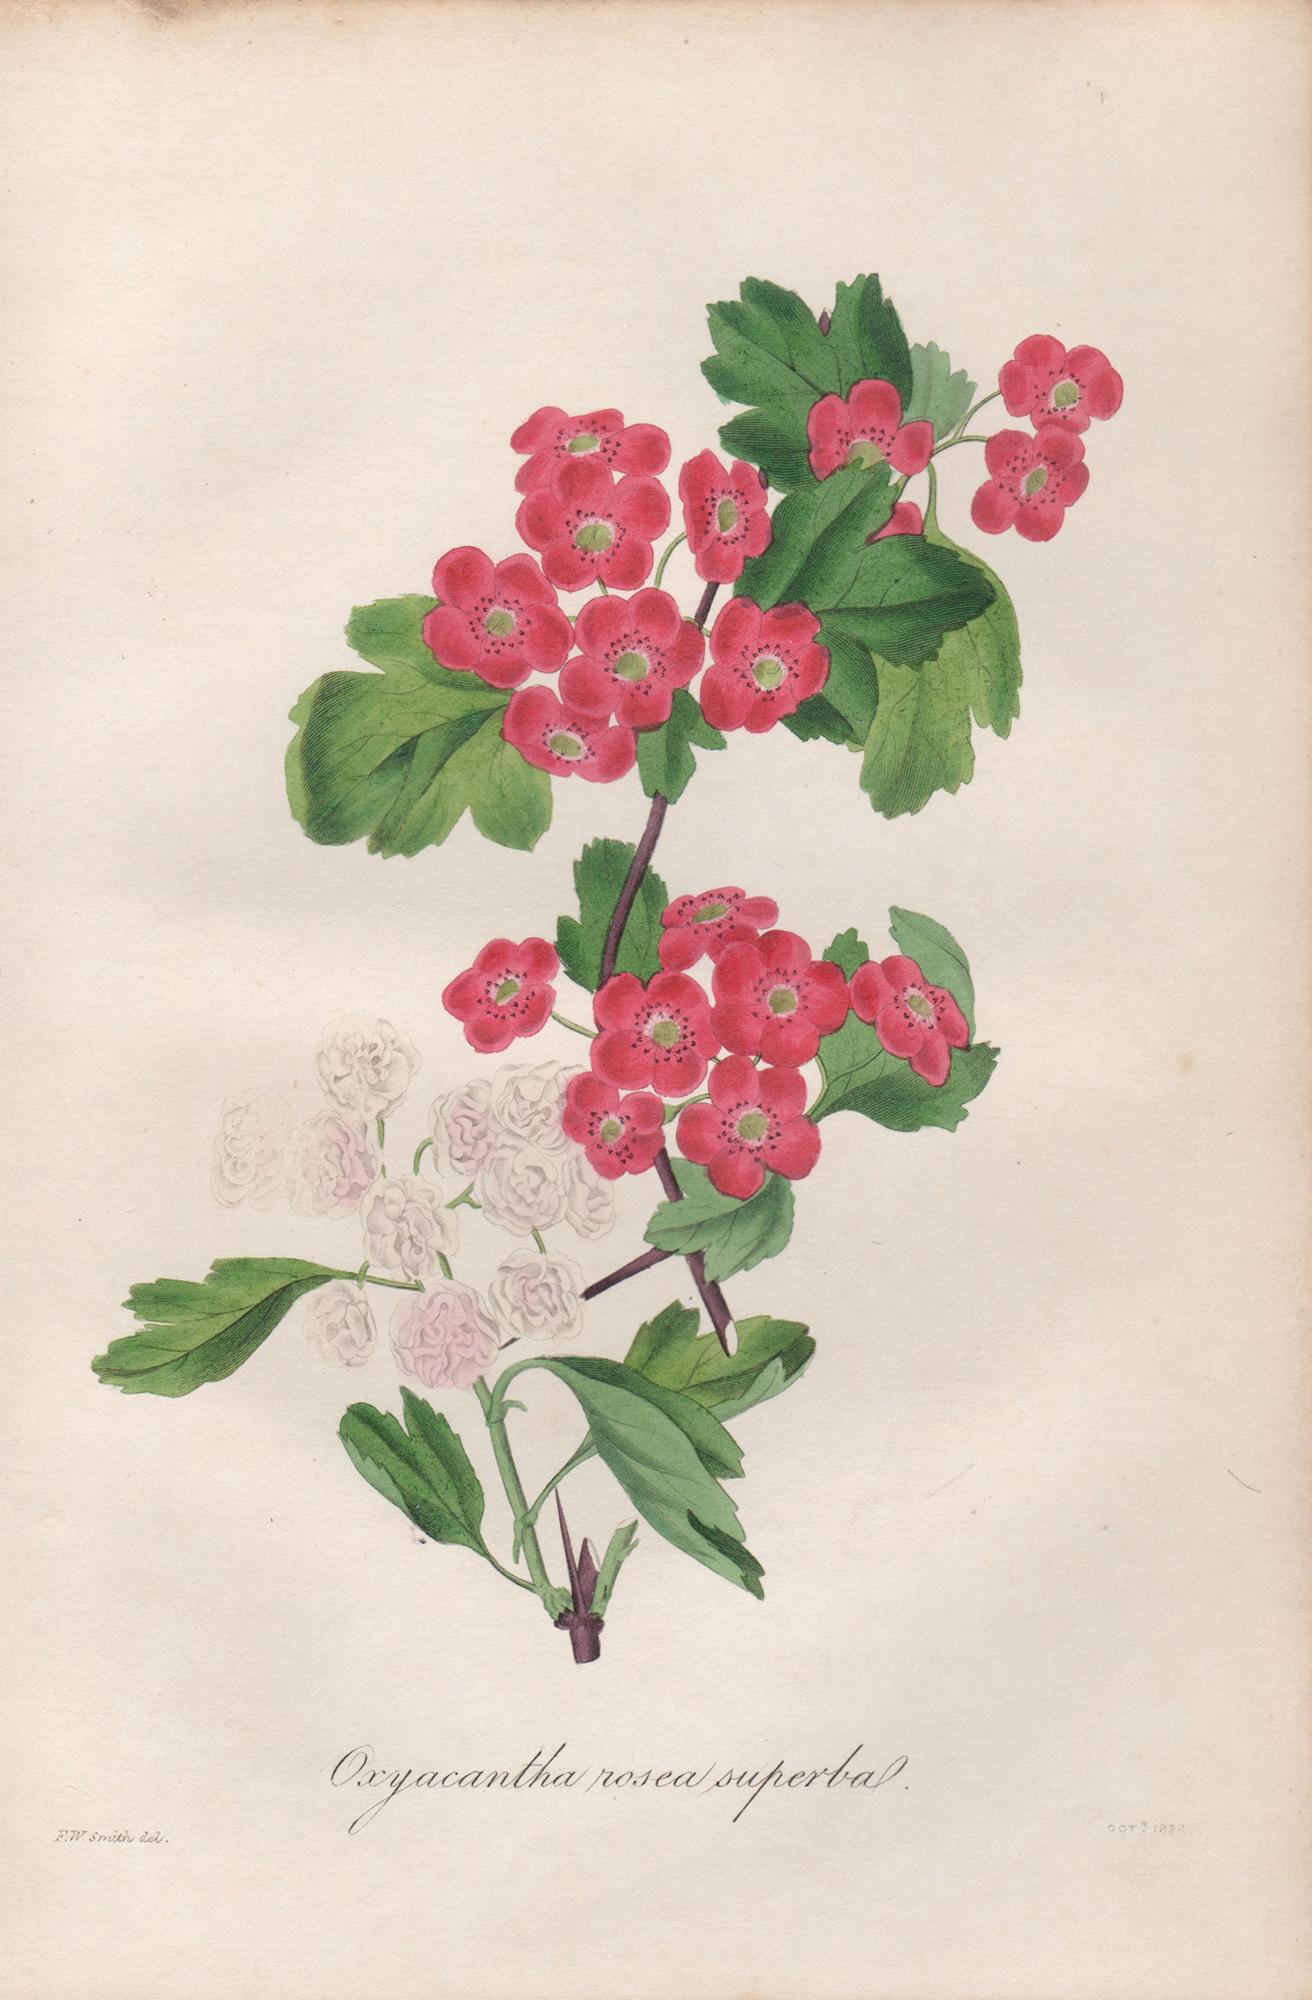 Frederick William Smith Print - Oxyacantha rosea superba, antique botanical pink flower engraving